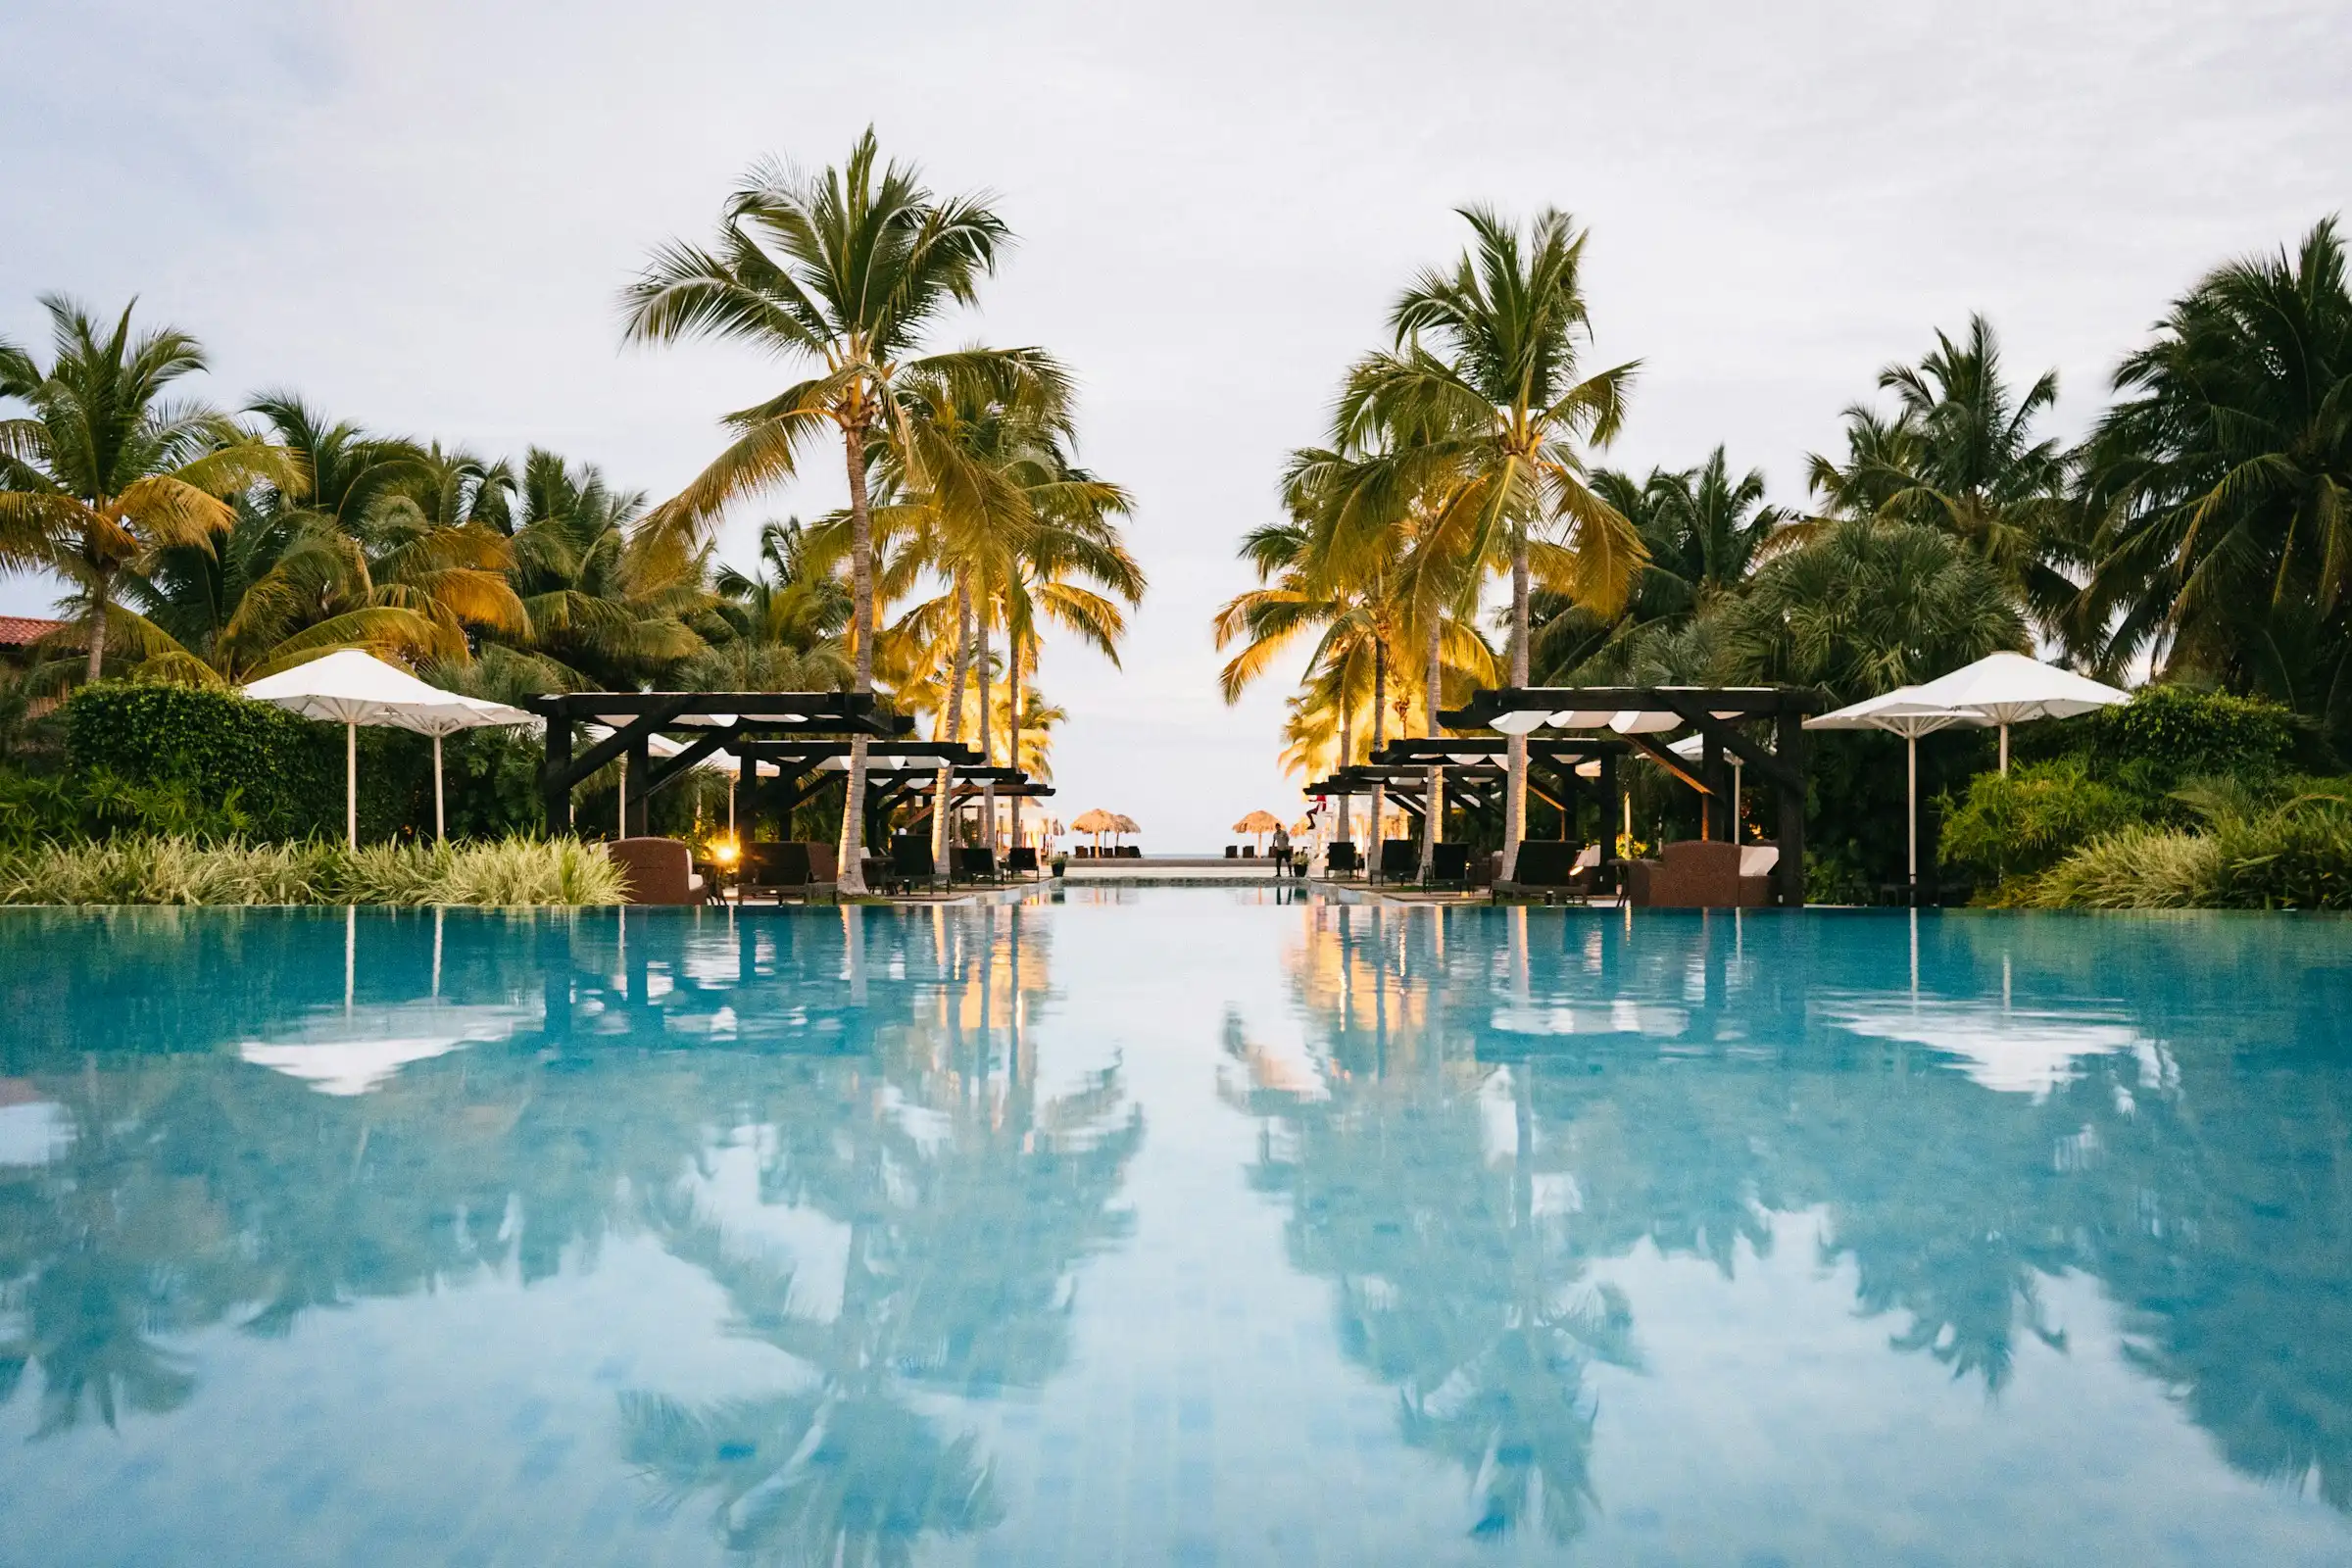 A beautiful resort pool in Panama